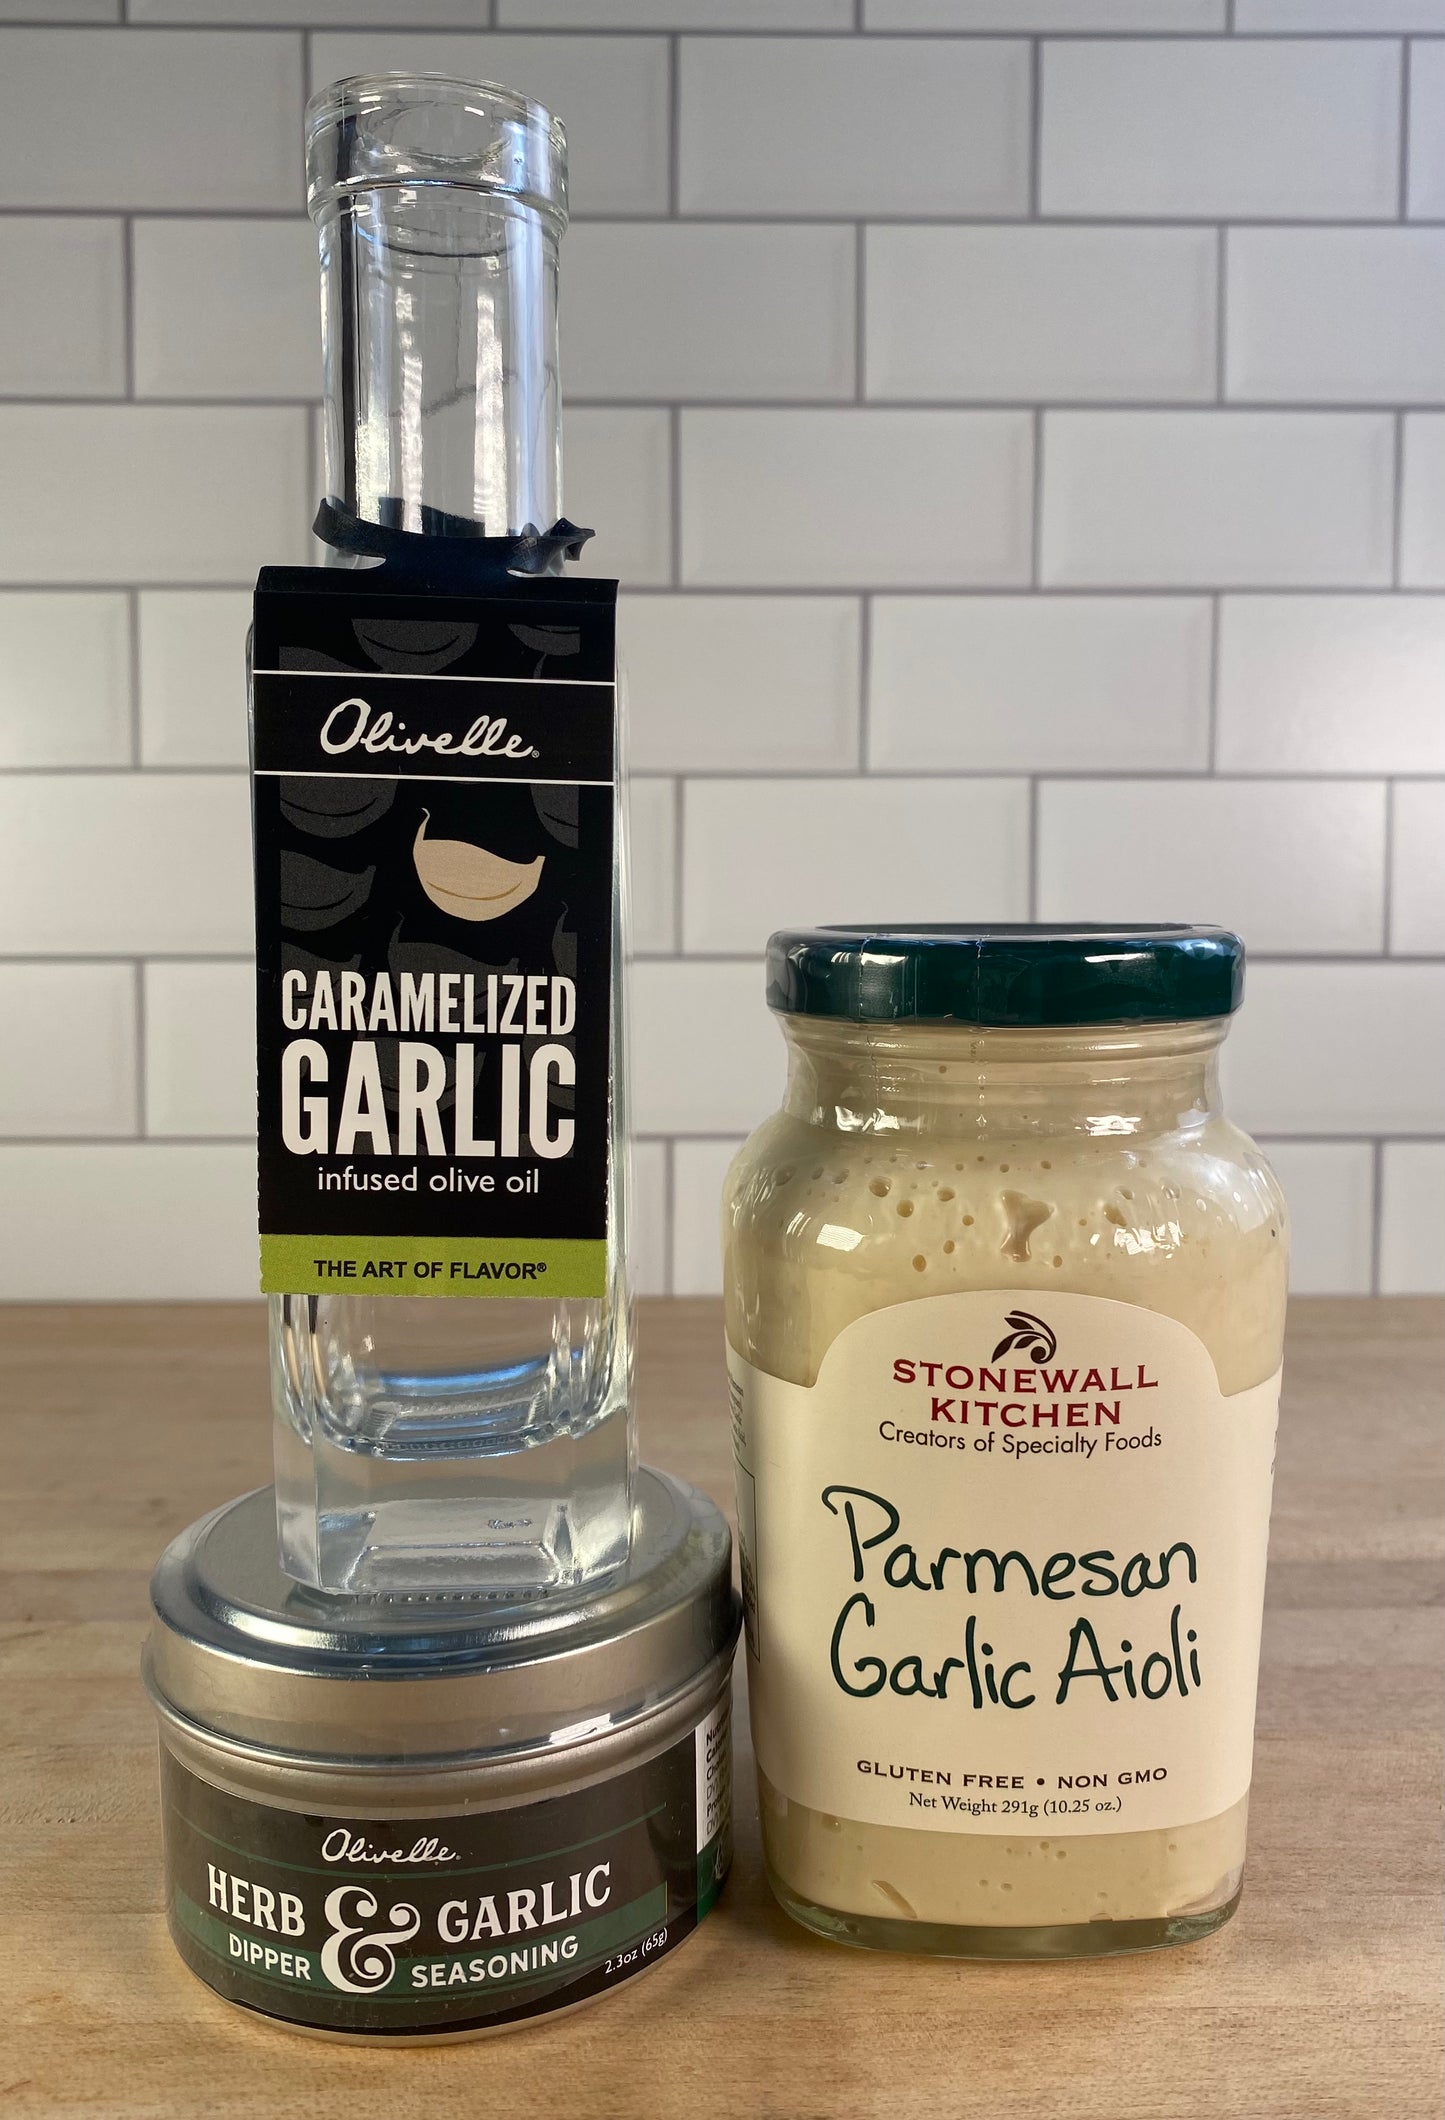 Caramelized Garlic Olive Oil + Herb & Garlic Dipper + Parmesan Garlic Aioli